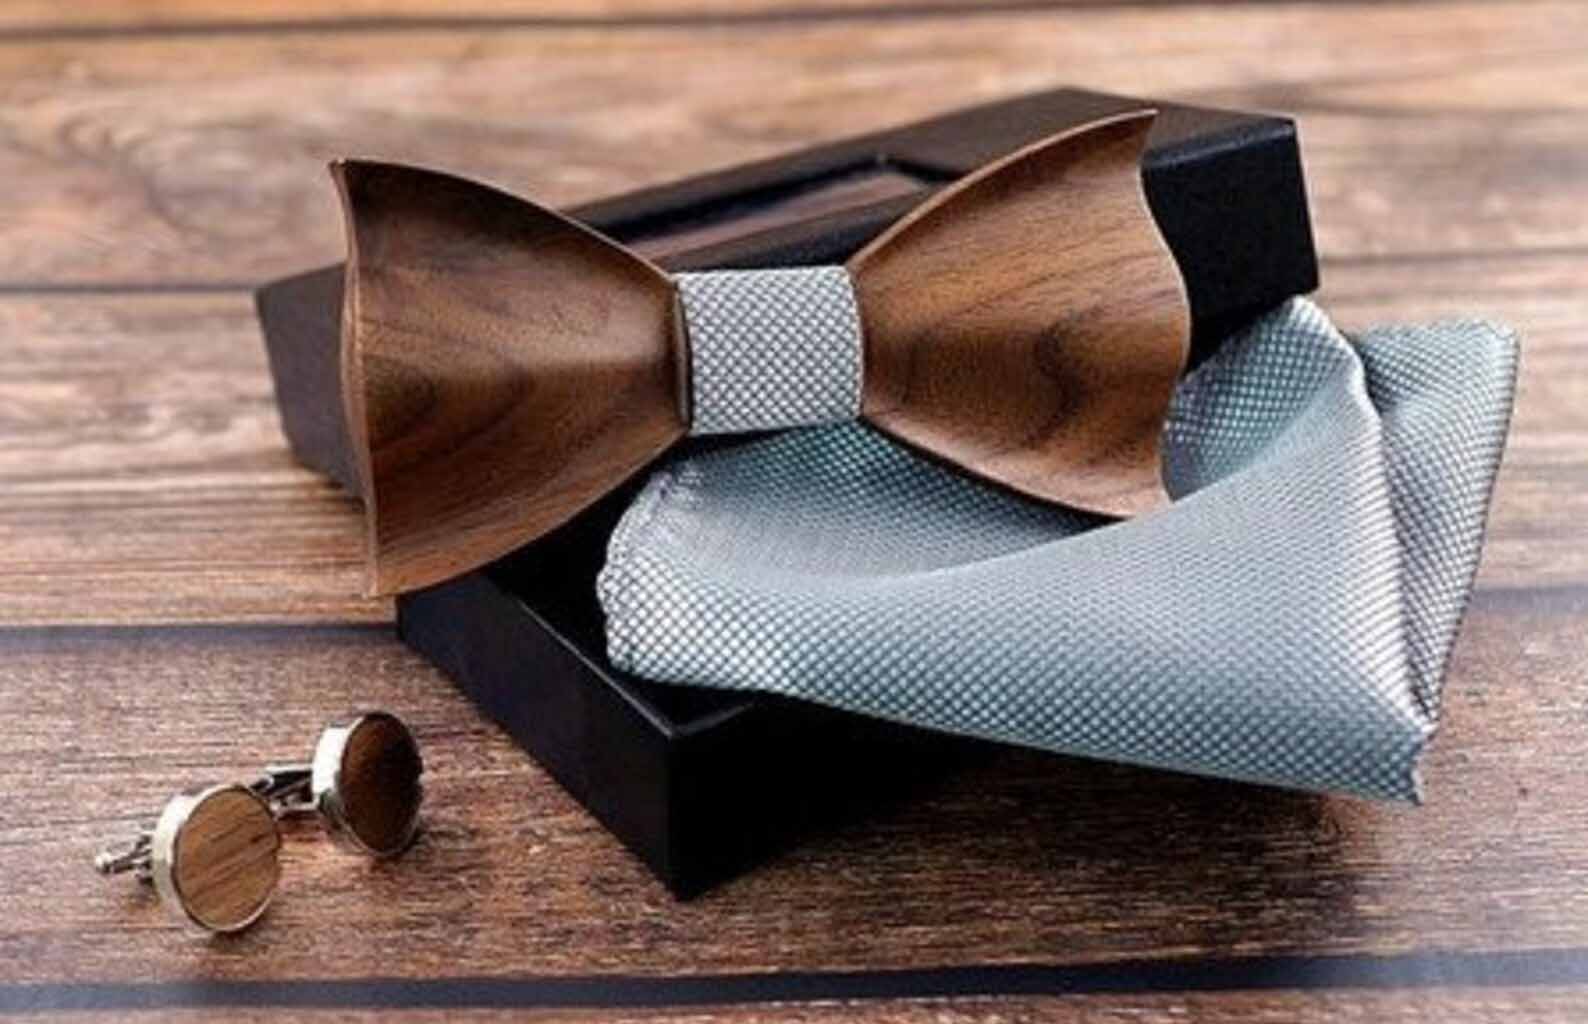 Modern Gift Idea - A wooden bow tie